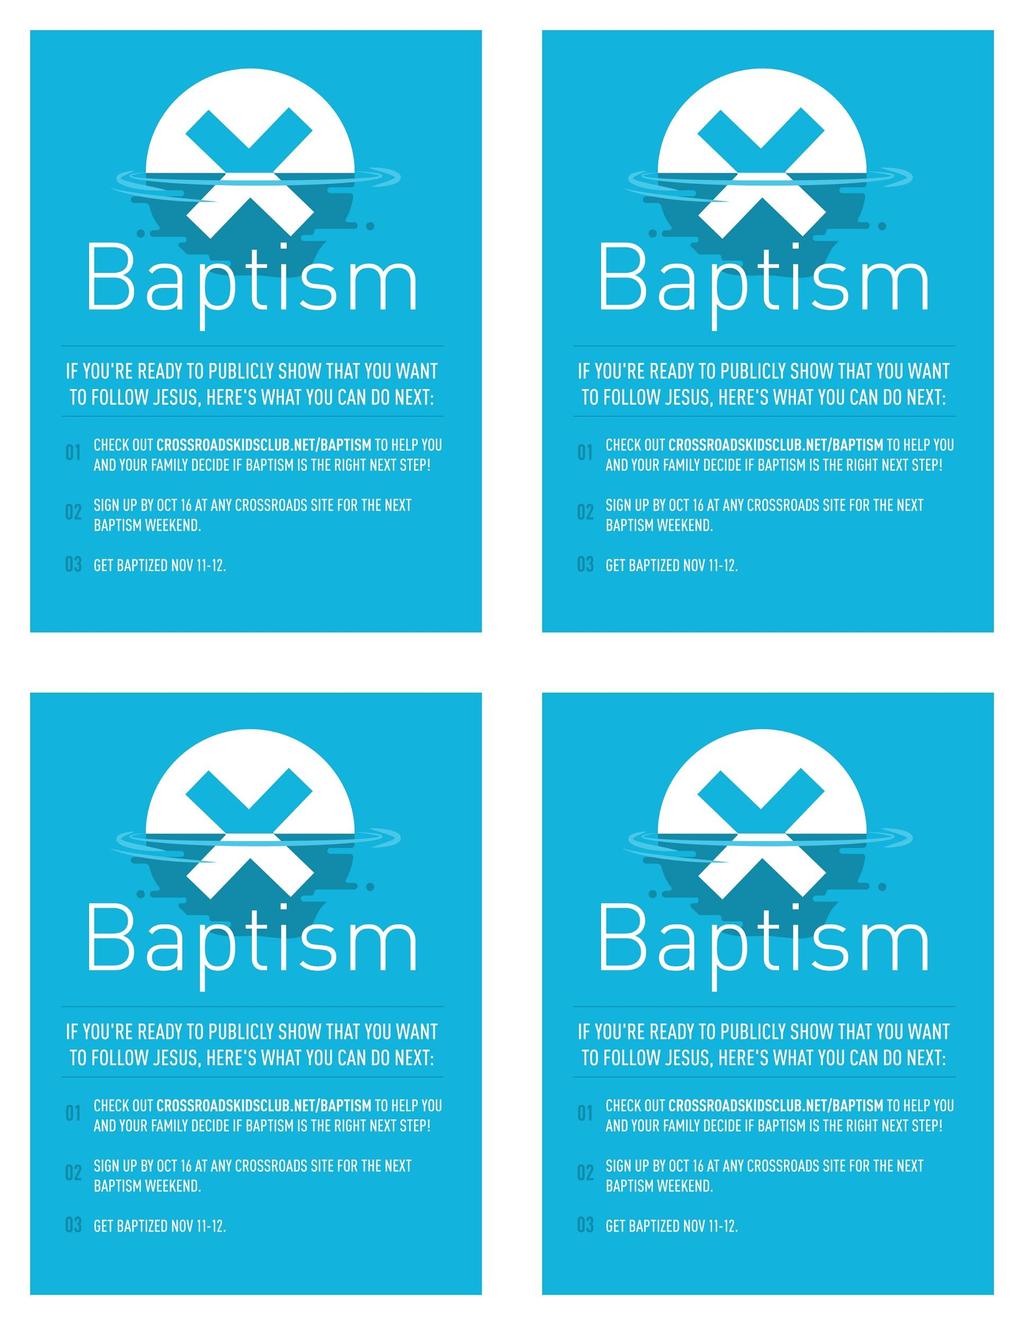 Baptism handout Include basic